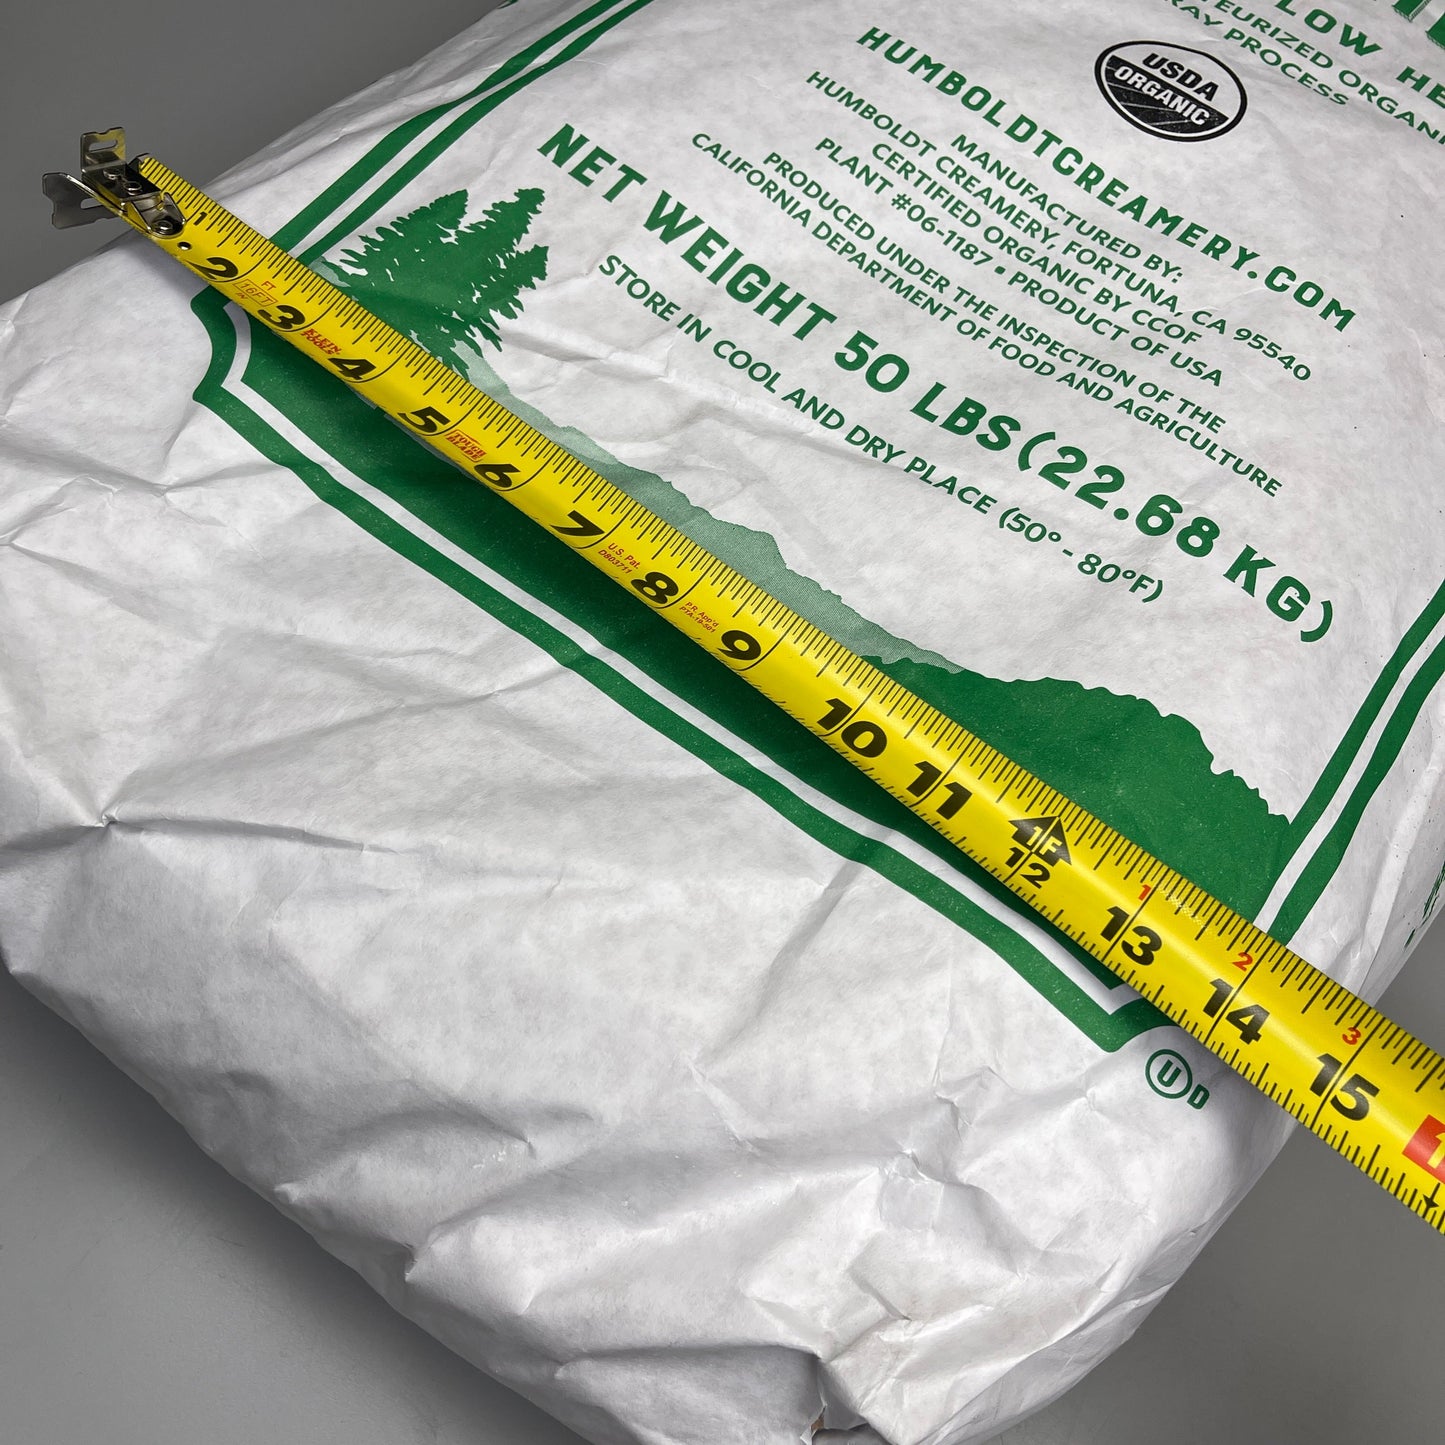 HUMBOLDT CREAMERY Organic Non Fat Powdered Dry Milk  50 lb bag